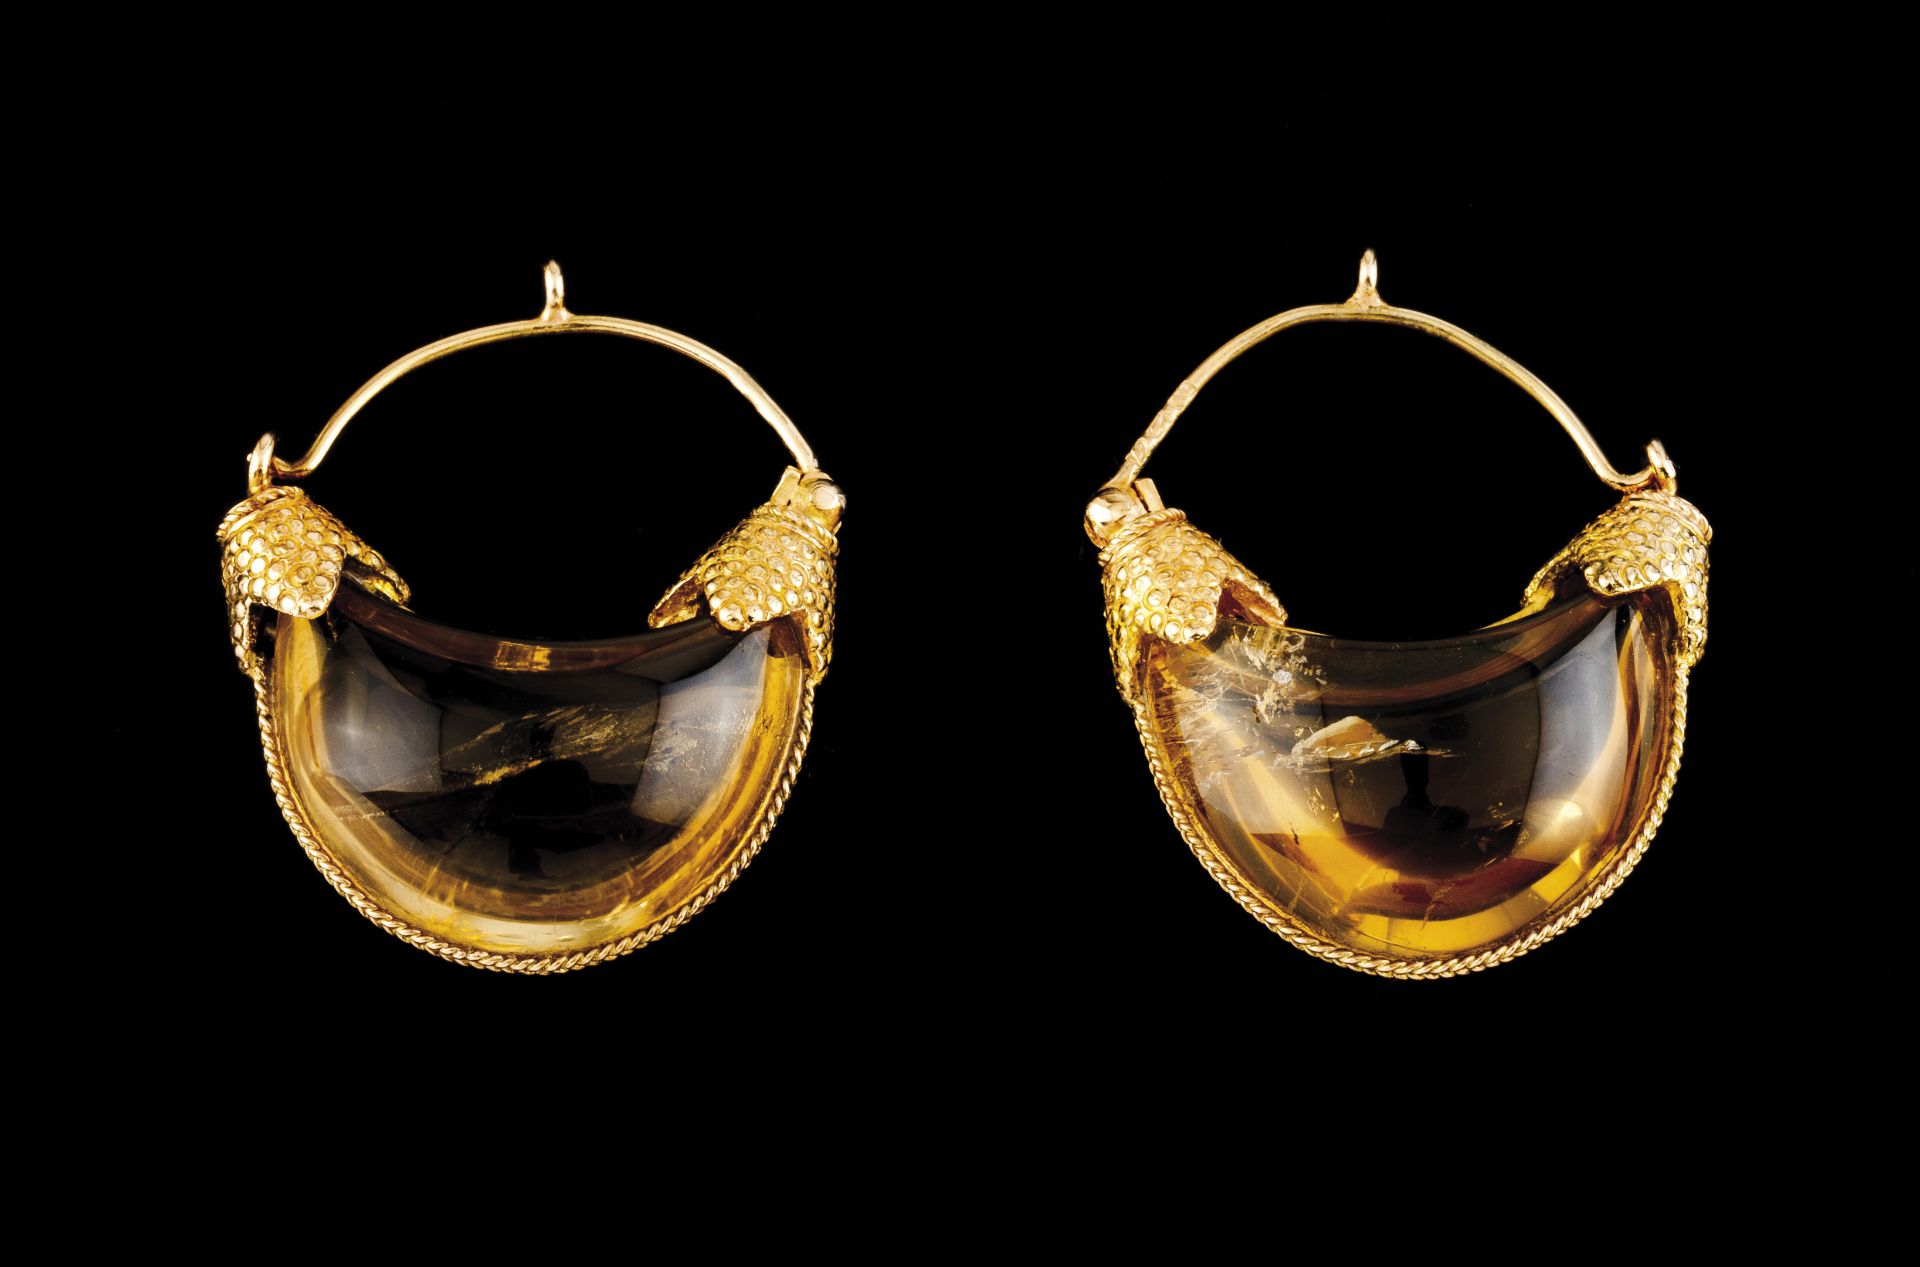 A pair of earringsGoldGreco-Roman inspired decoration set with two citrine quartzLisbon hallmark